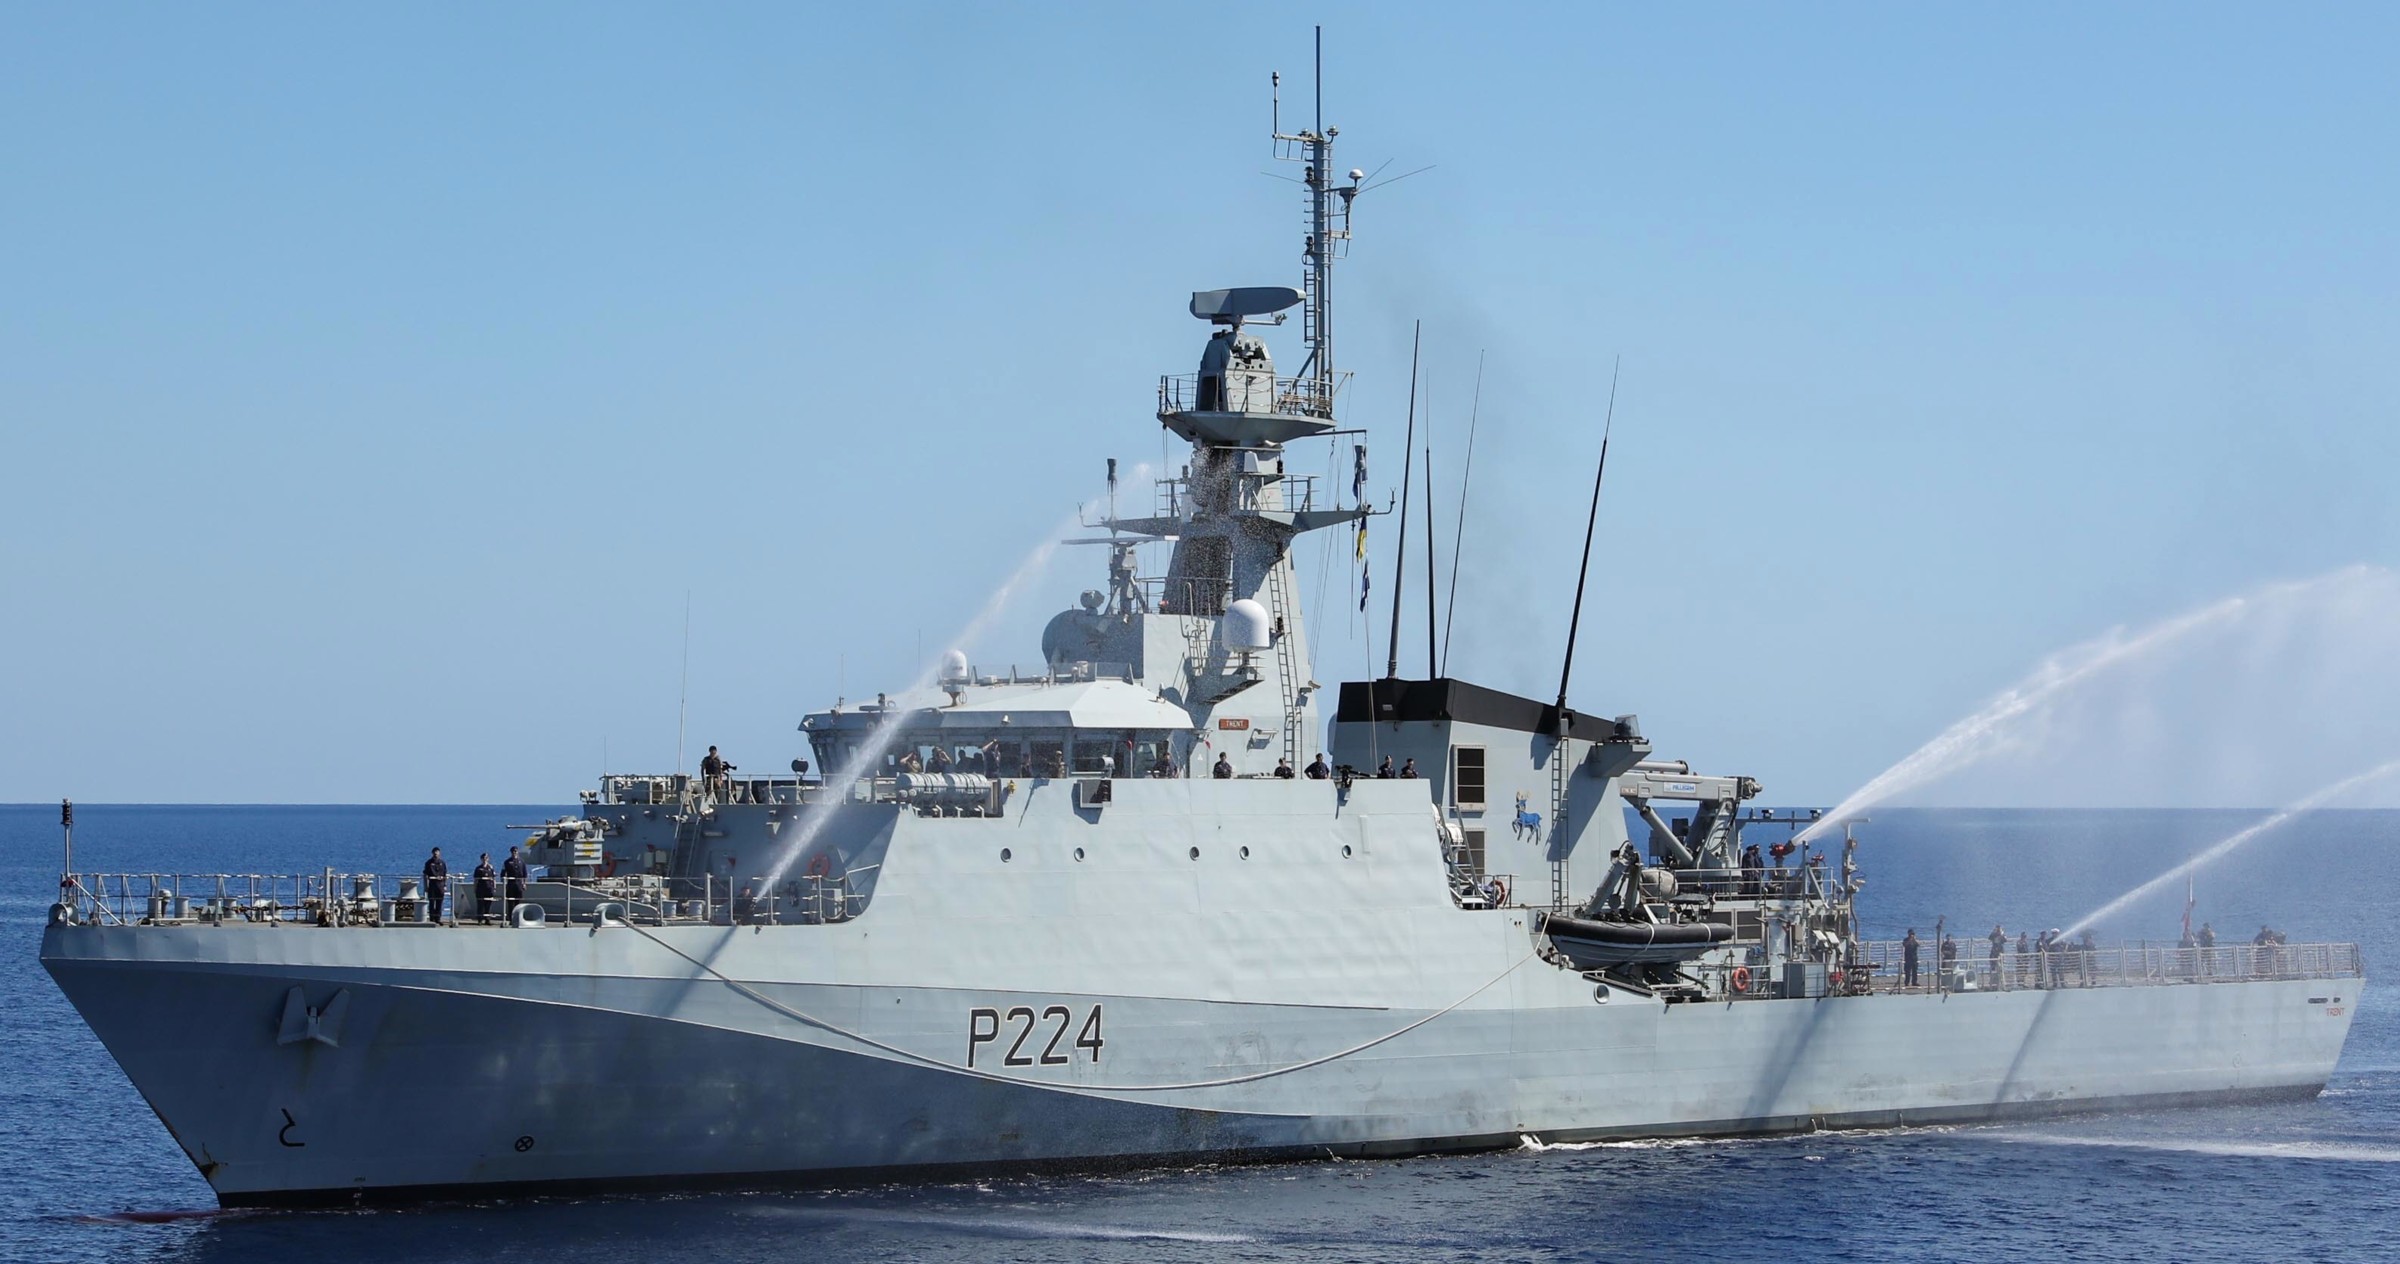 p224 hms trent river class offshore patrol vessel opv royal navy 48